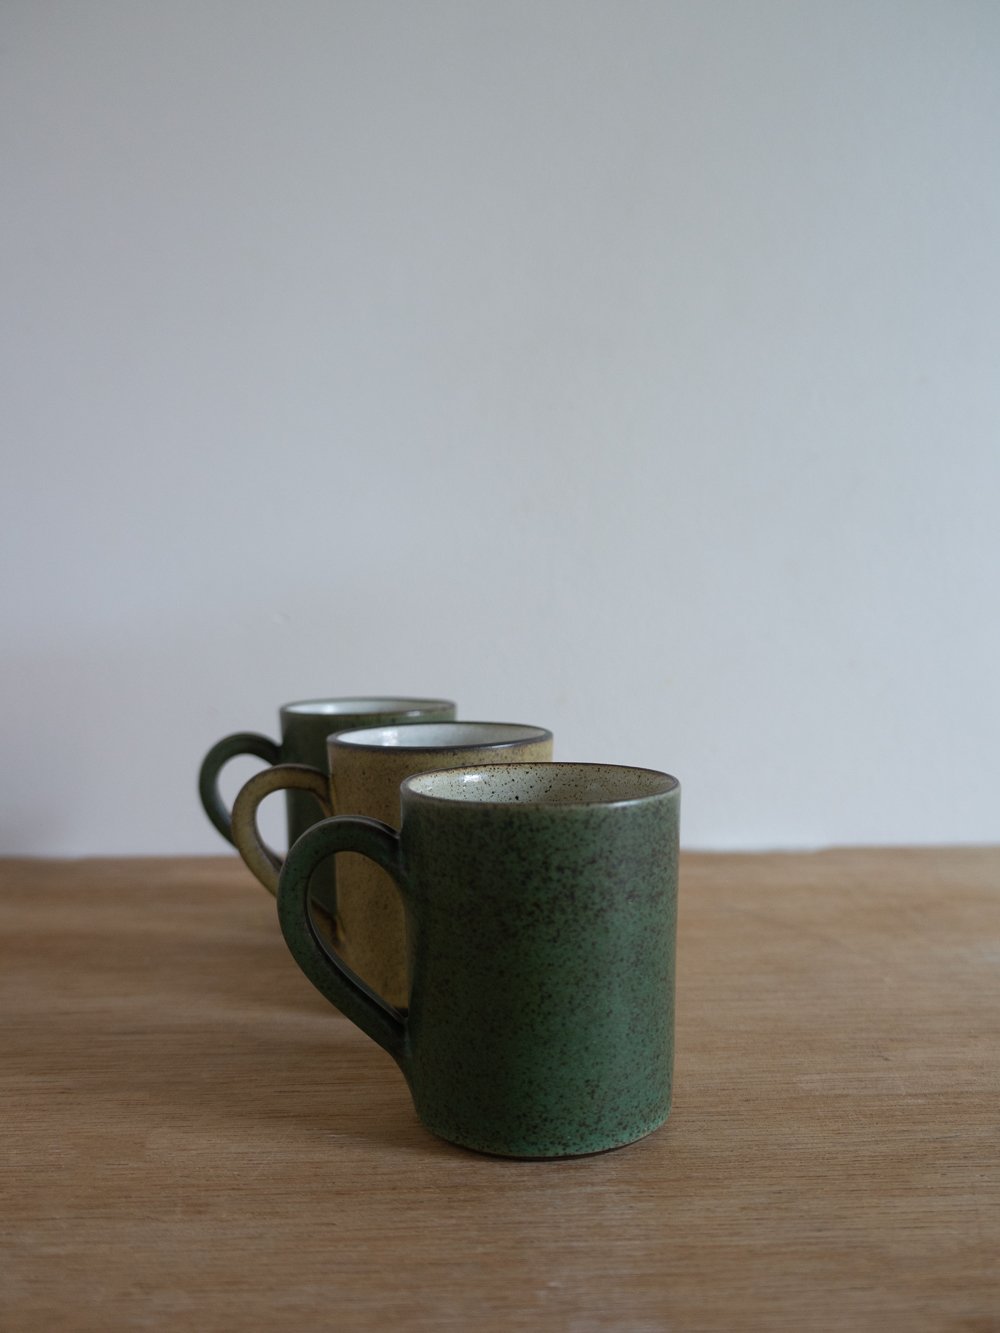 Image of Dutch mugs